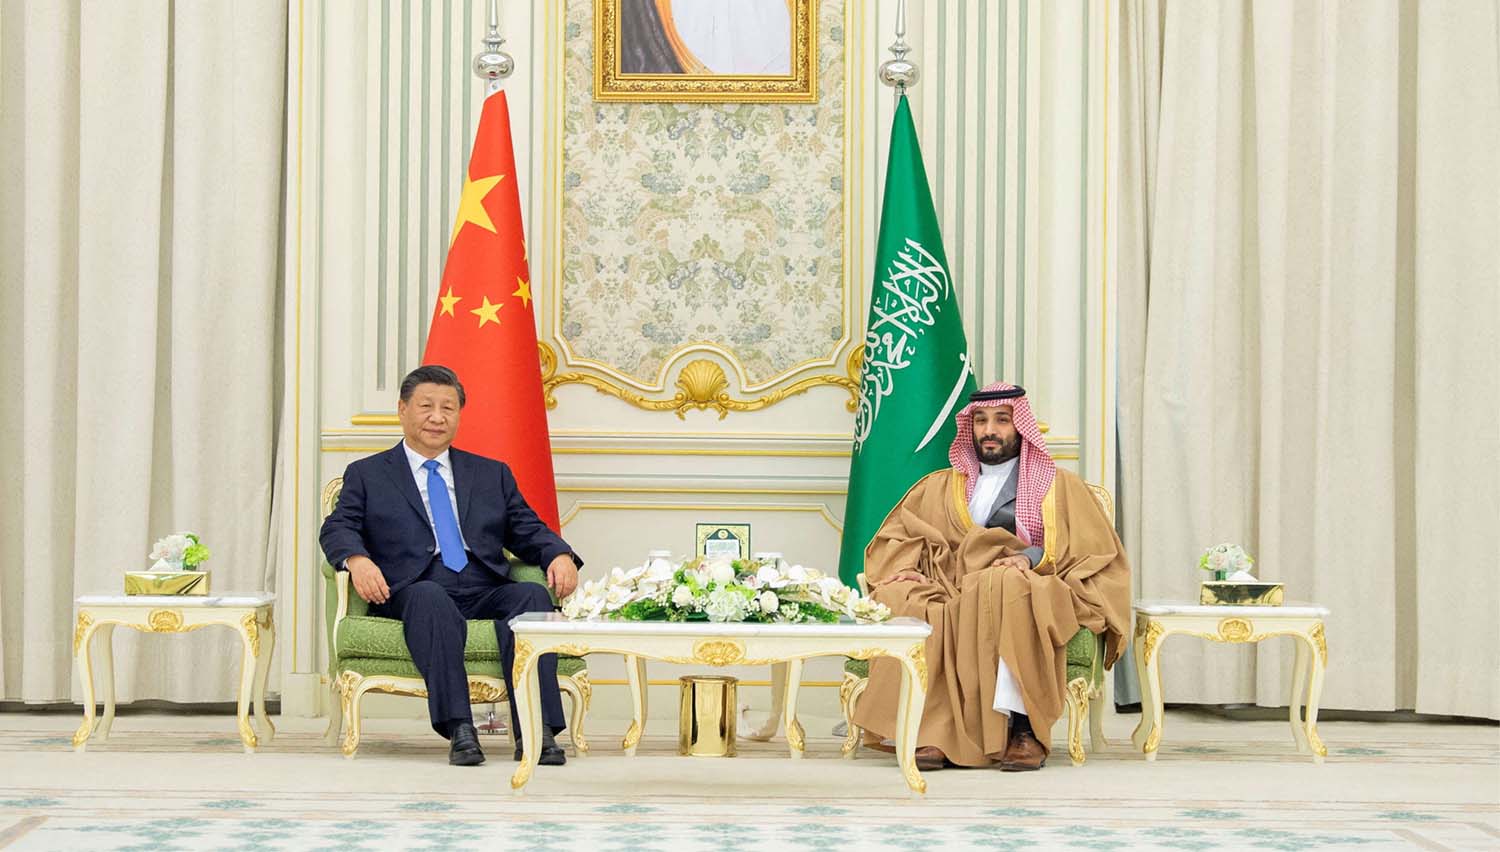 Chinese President Xi Jinping visited Saudi Arabia in December last year